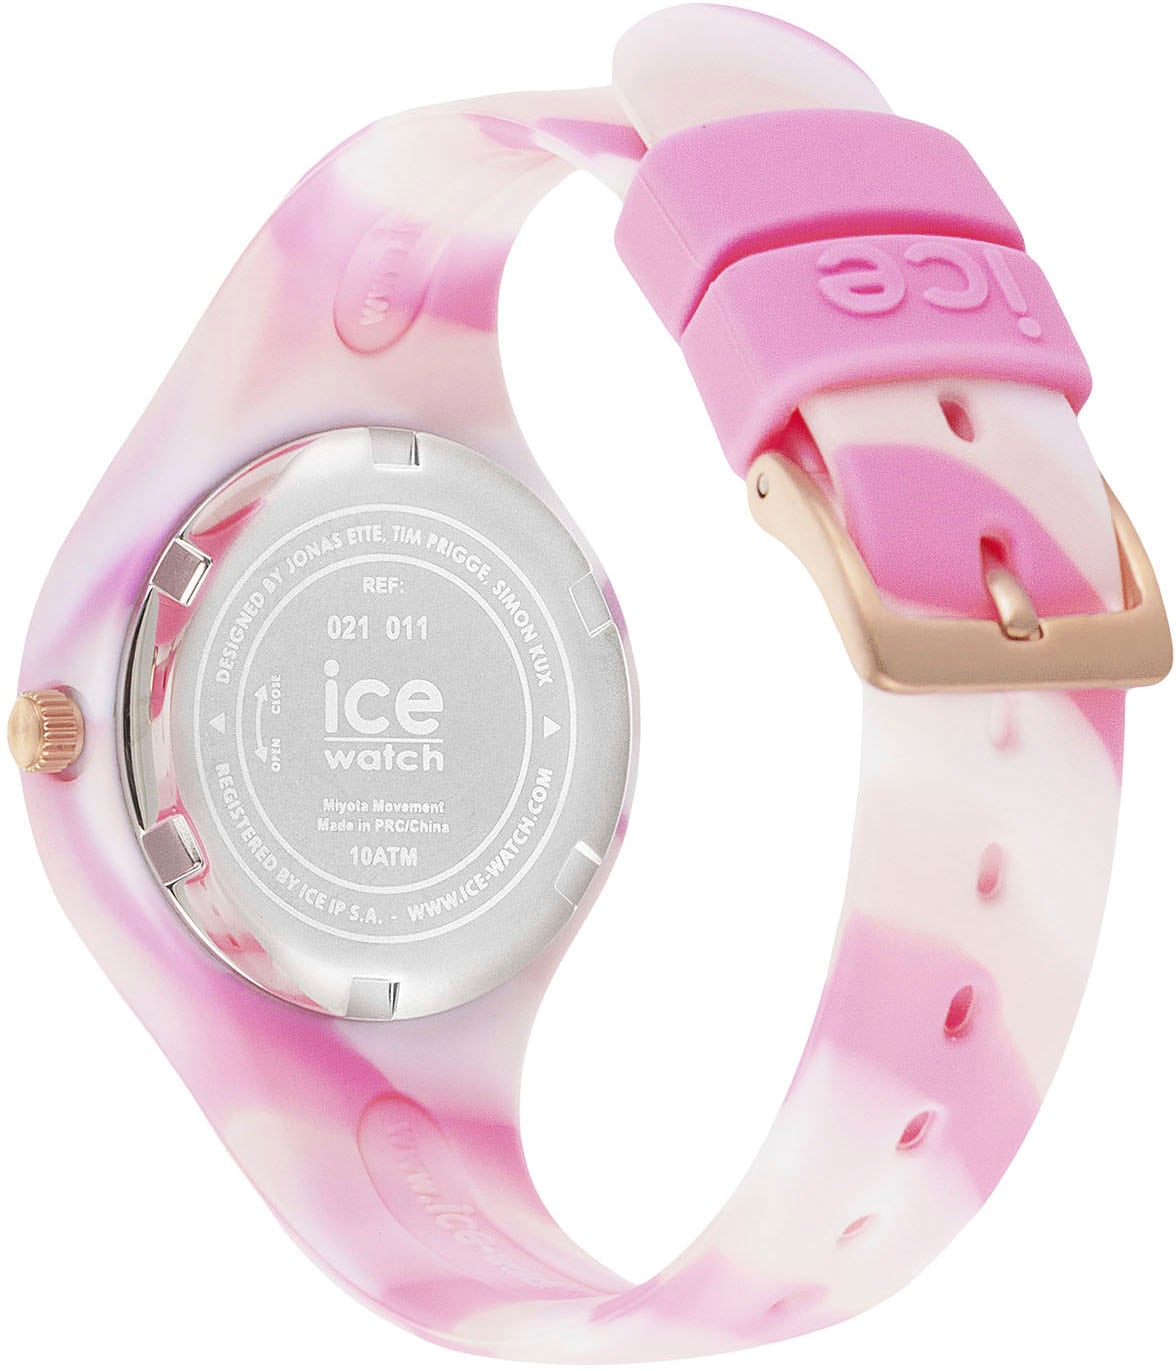 ♕ shades and - ideal Extra-Small - tie Geschenk dye auch 021011«, 3H, Quarzuhr ice-watch bei »ICE Pink als -